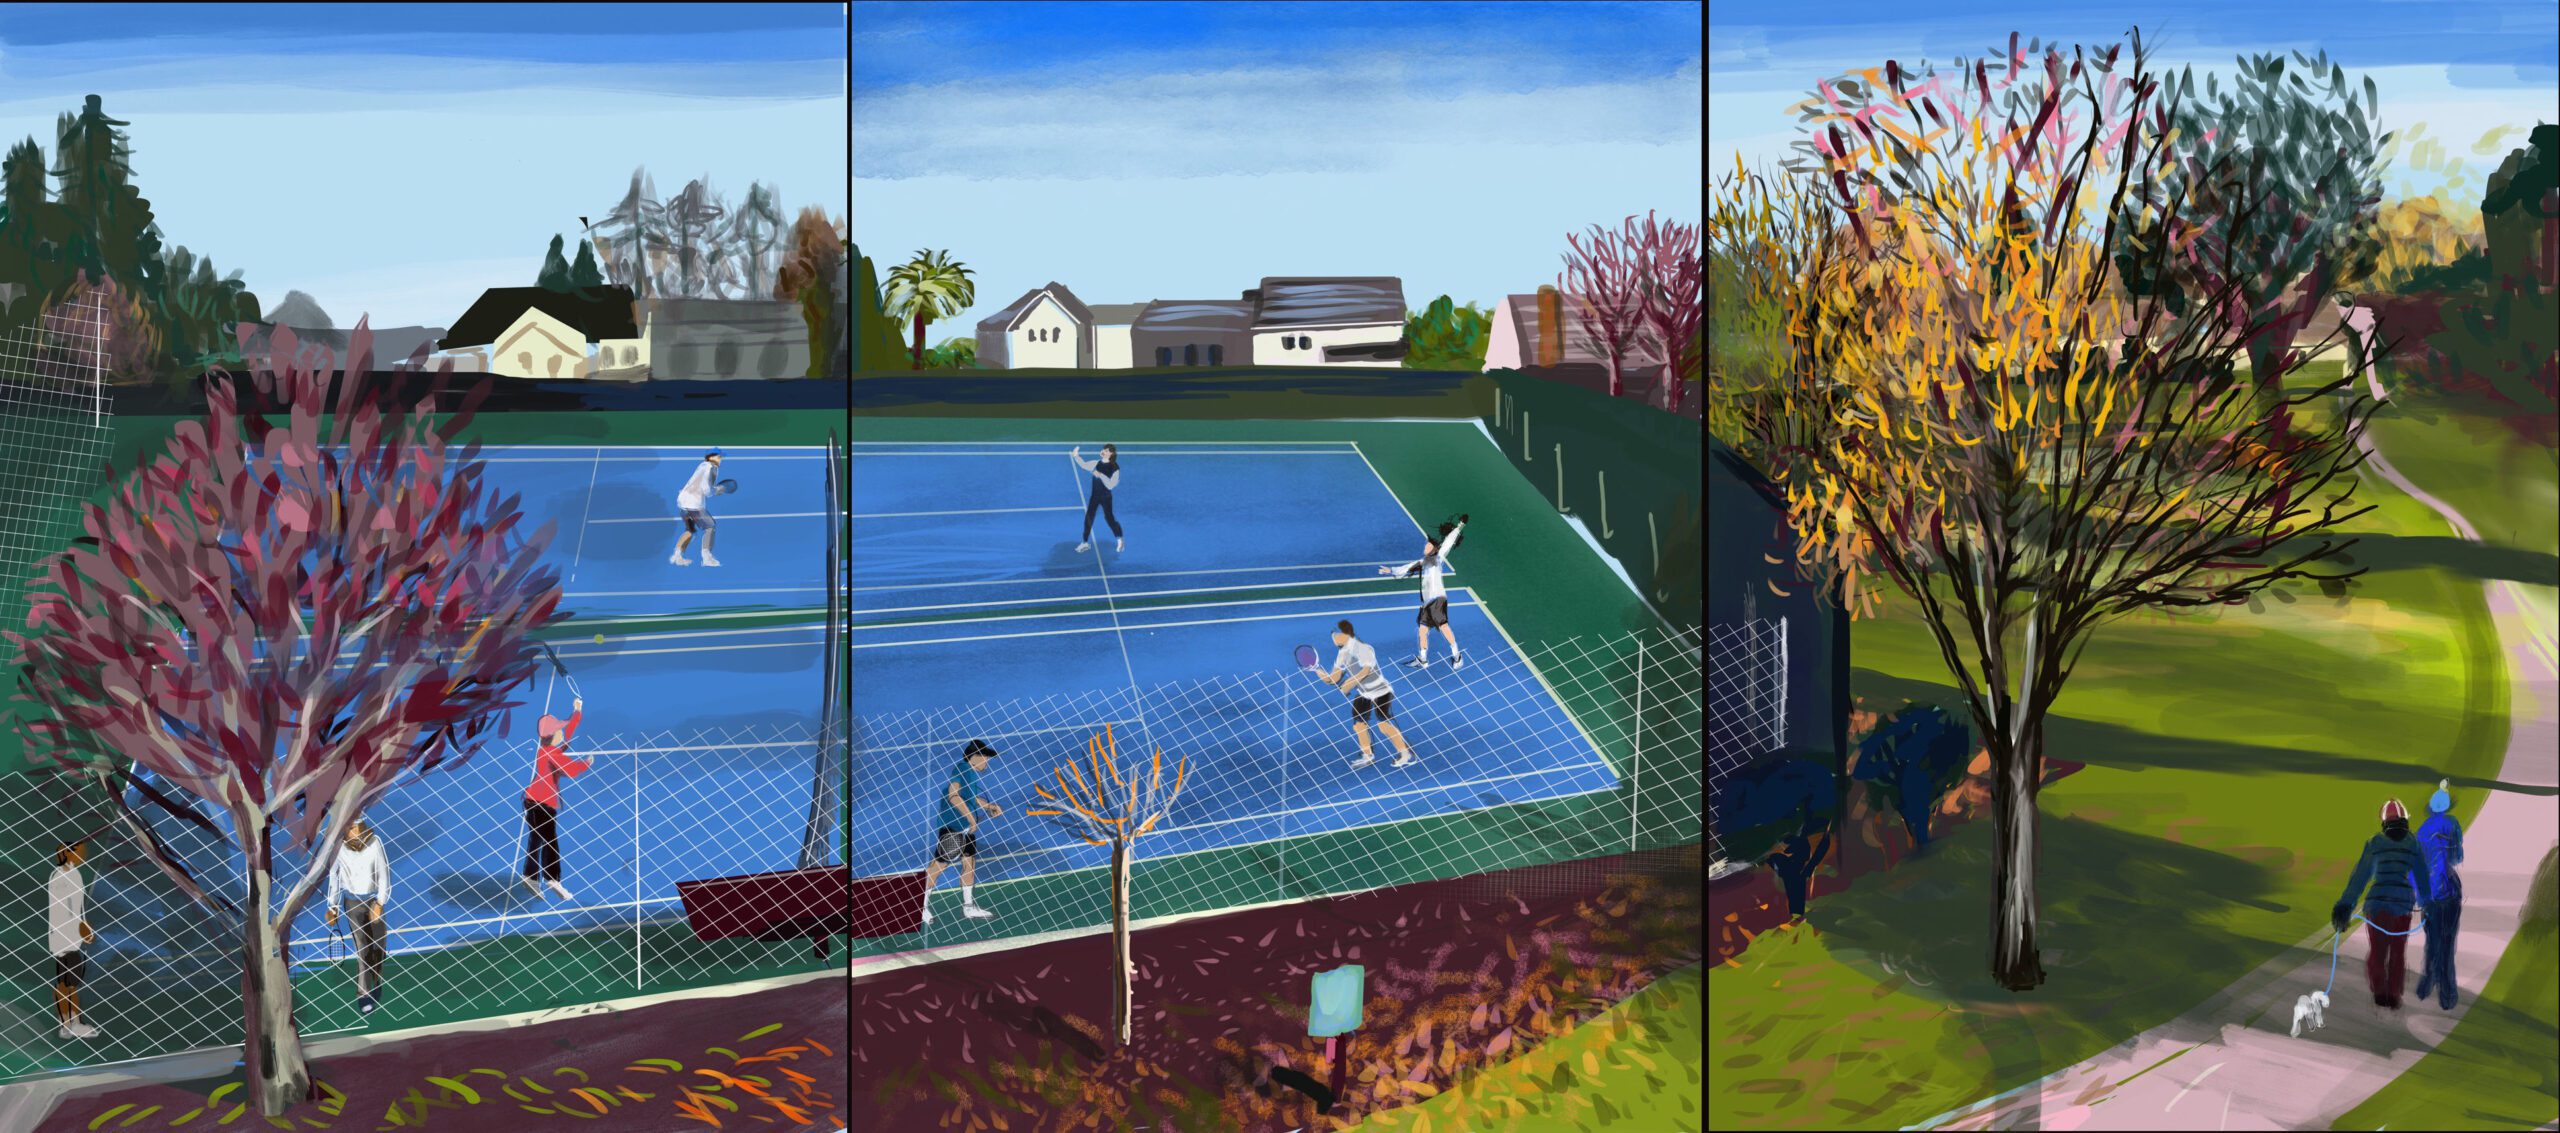 Anyone for Tennis, by Caroline Mustard